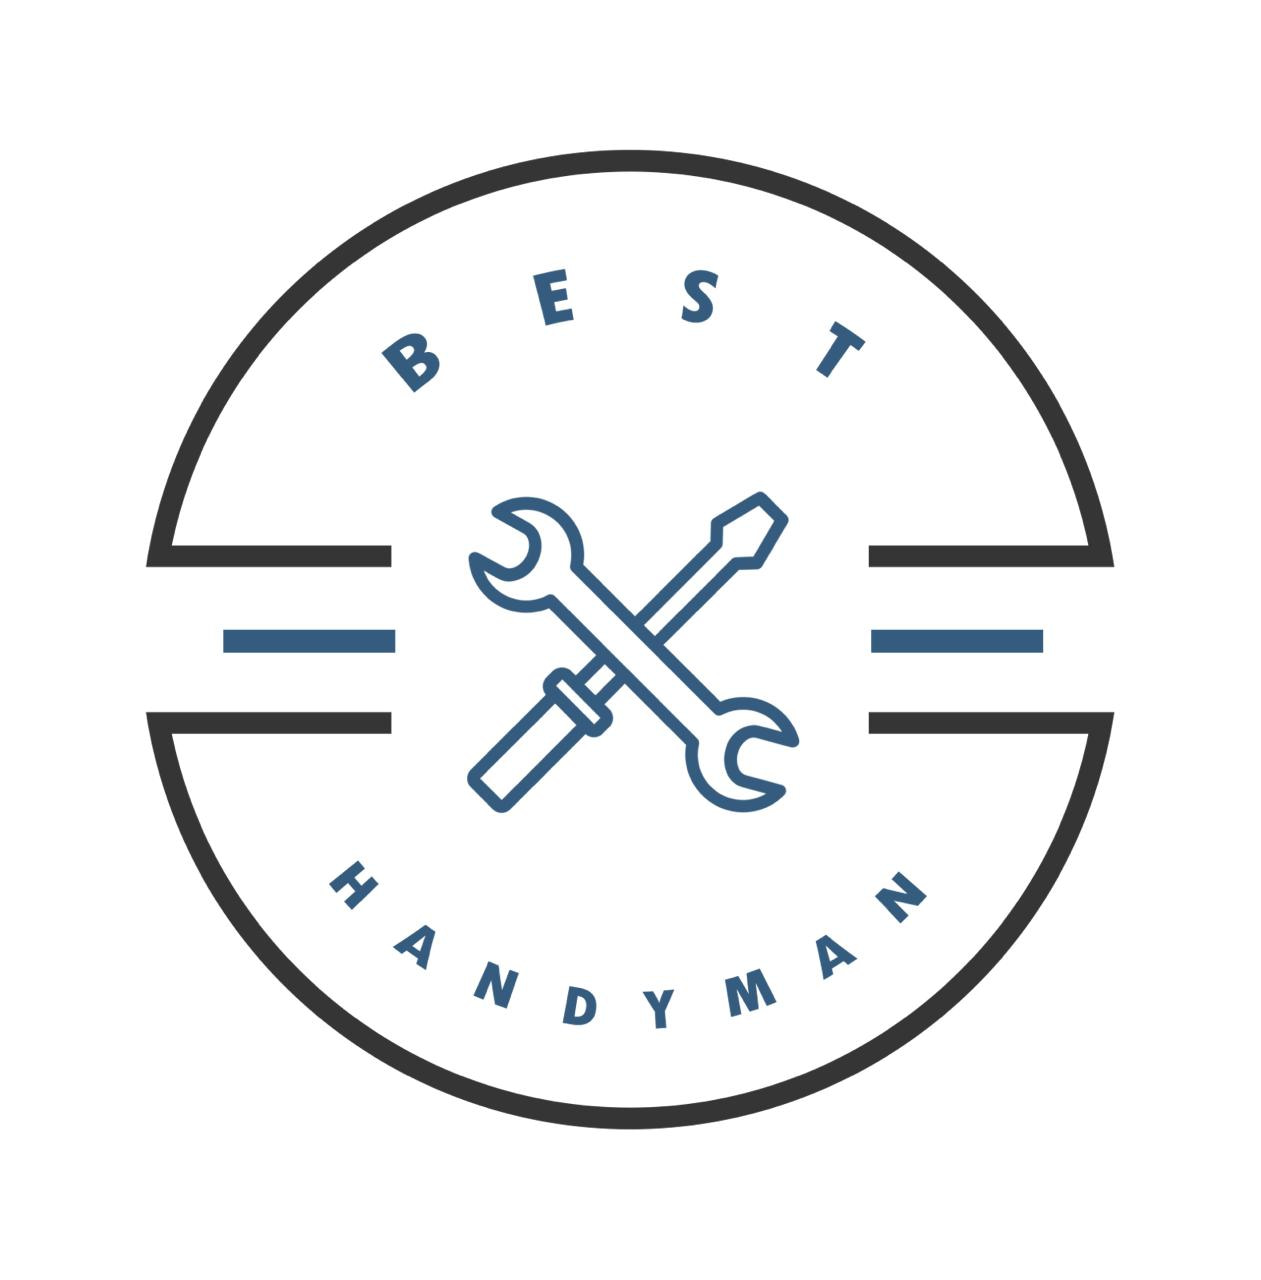 Best Pest Control by Handymanreviewed.com